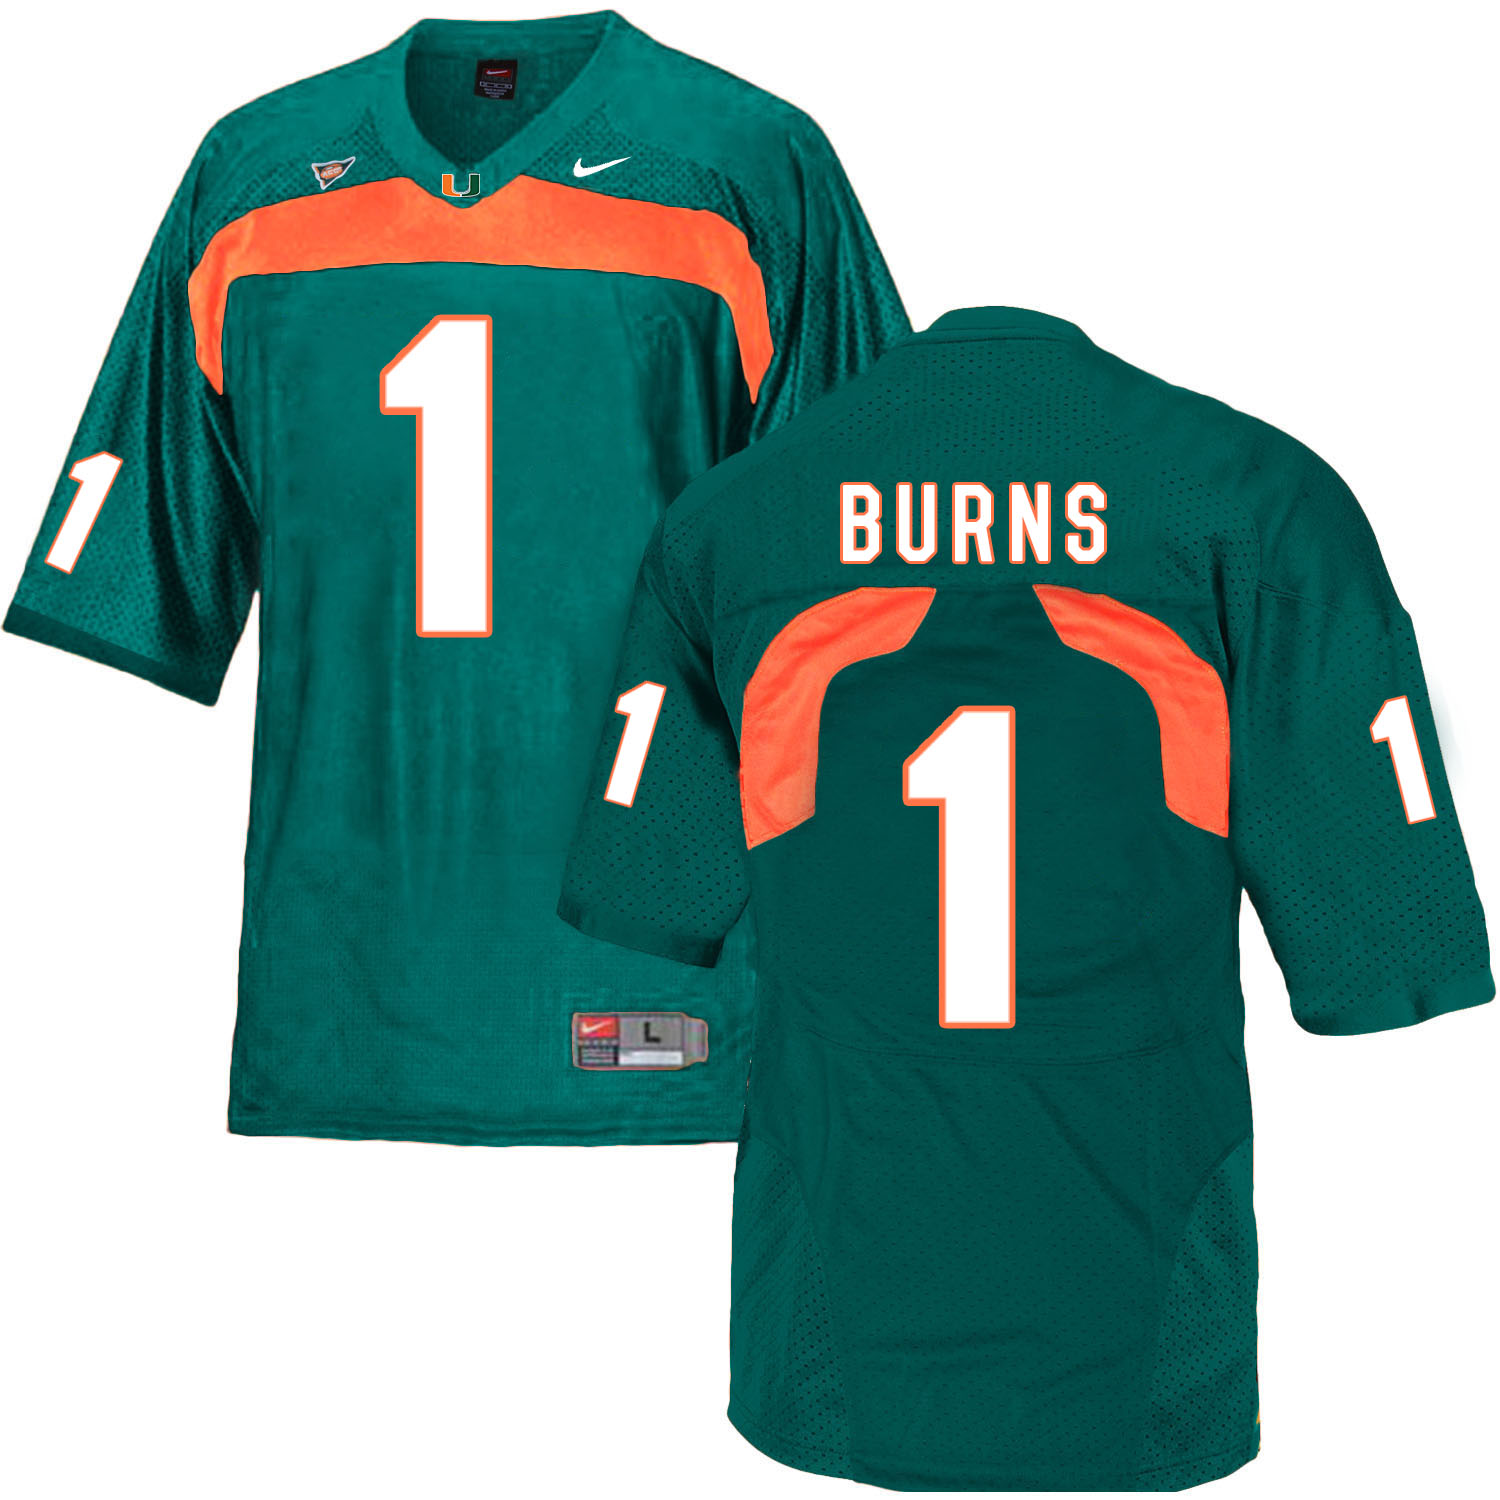 Miami Hurricanes 1 Artie Burns Green College Football Jersey